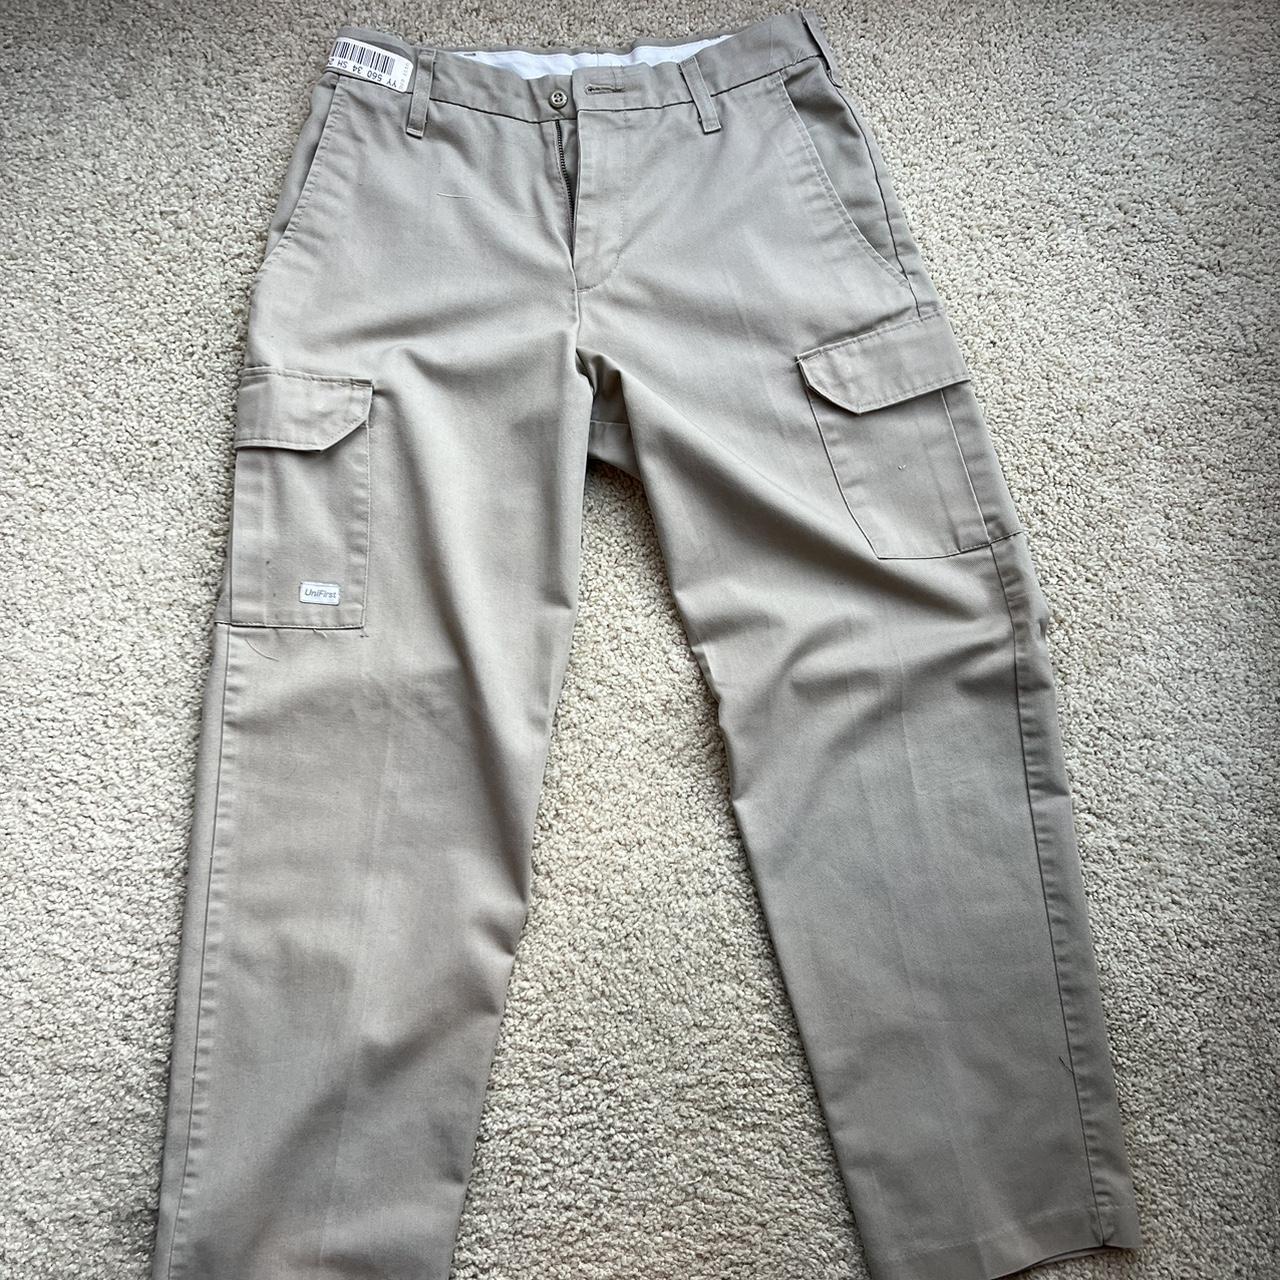 Khaki Softwill Cargo Pants Size 30x30 - Depop